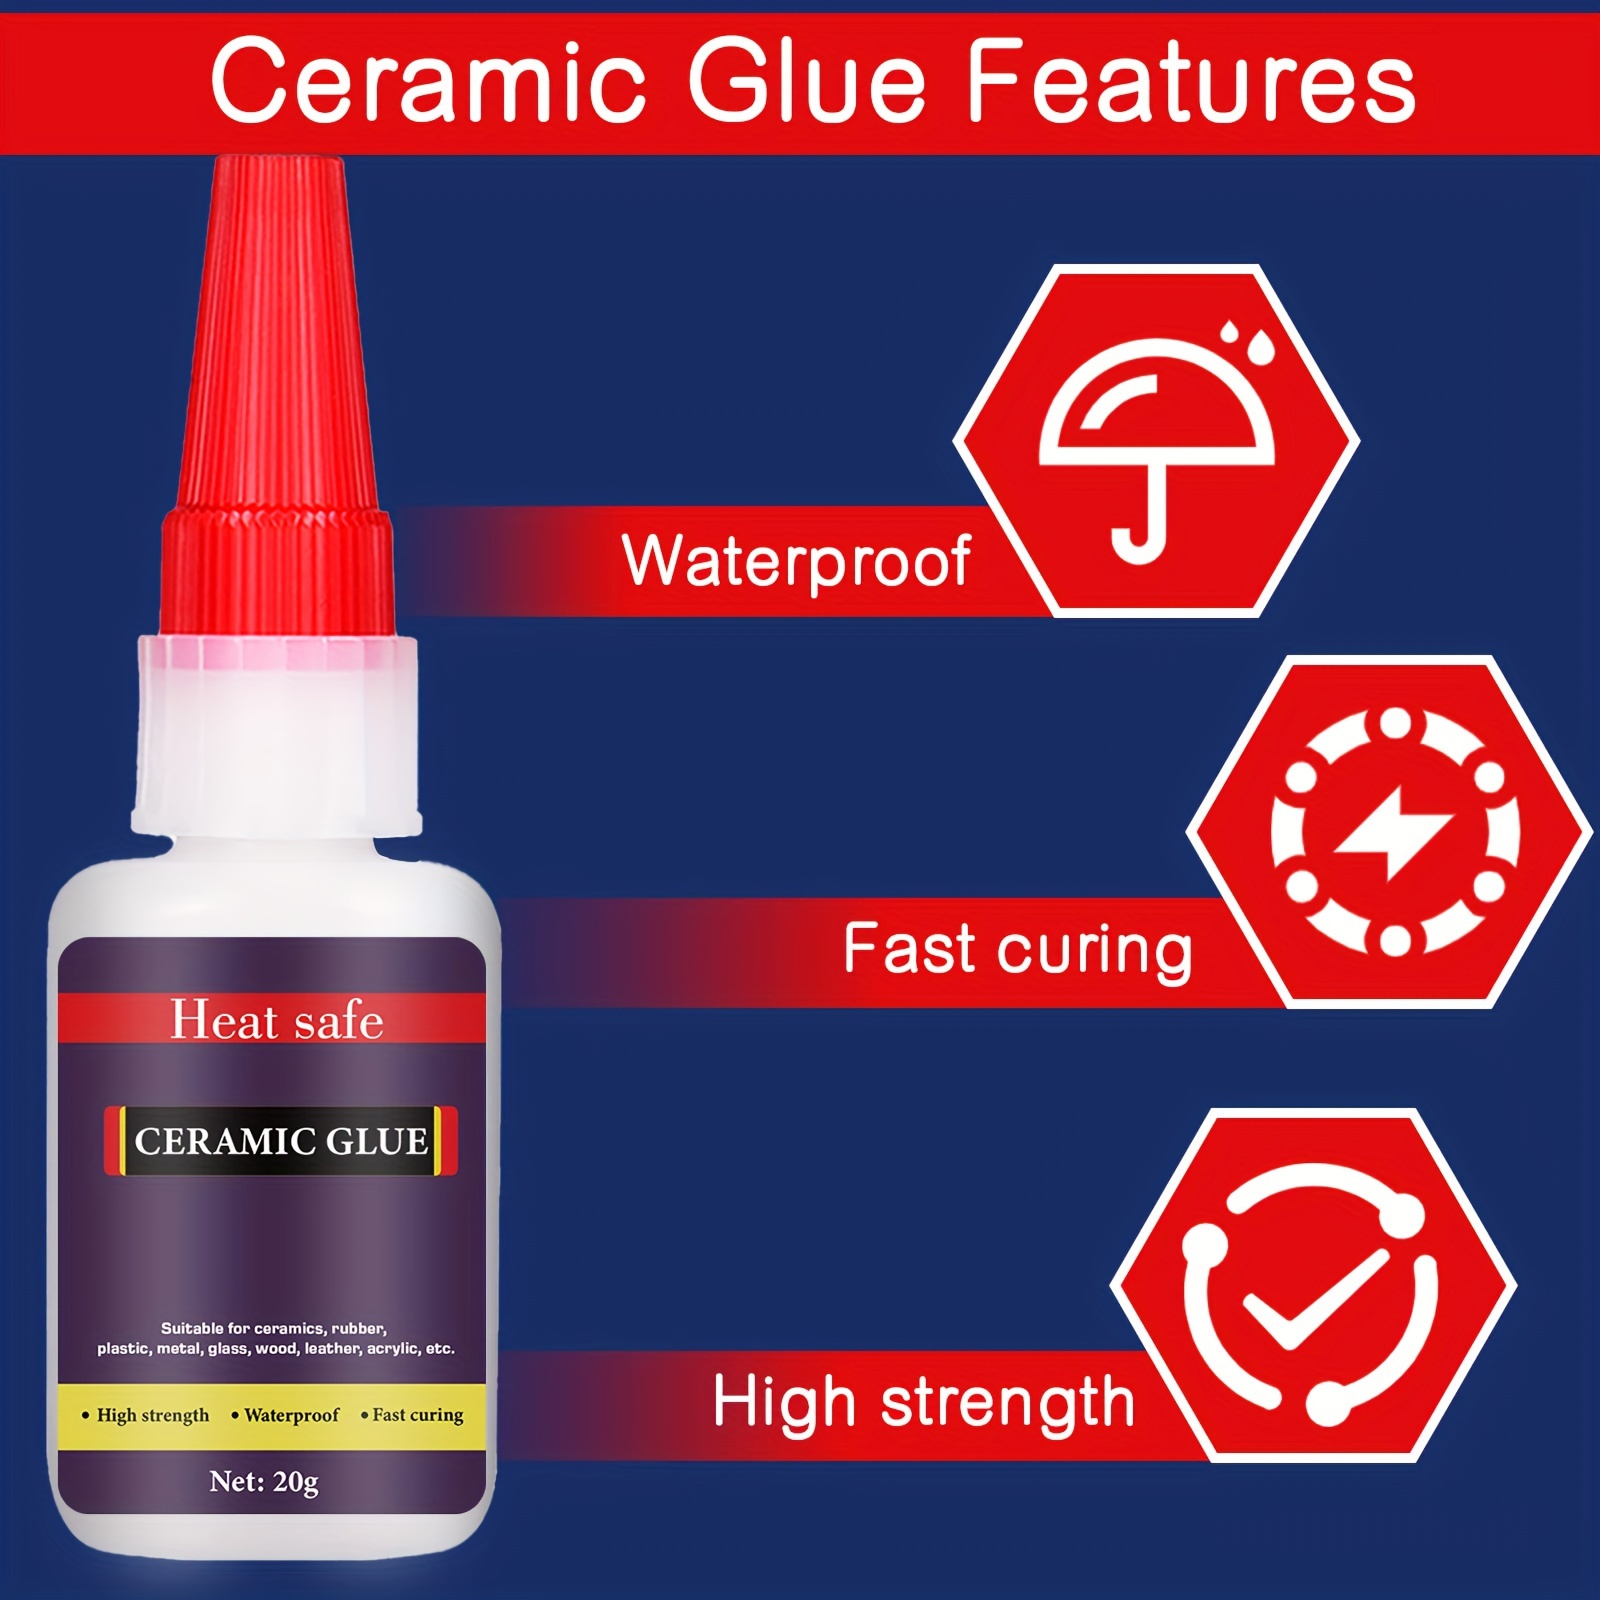 1 Pack Ceramic Glue Food Grade, 0.71oz Glue For Porcelain And Pottery  Repair, Instant Super Glue For Pottery, Porcelain, Glass, Plastic, Metal,  Rubber